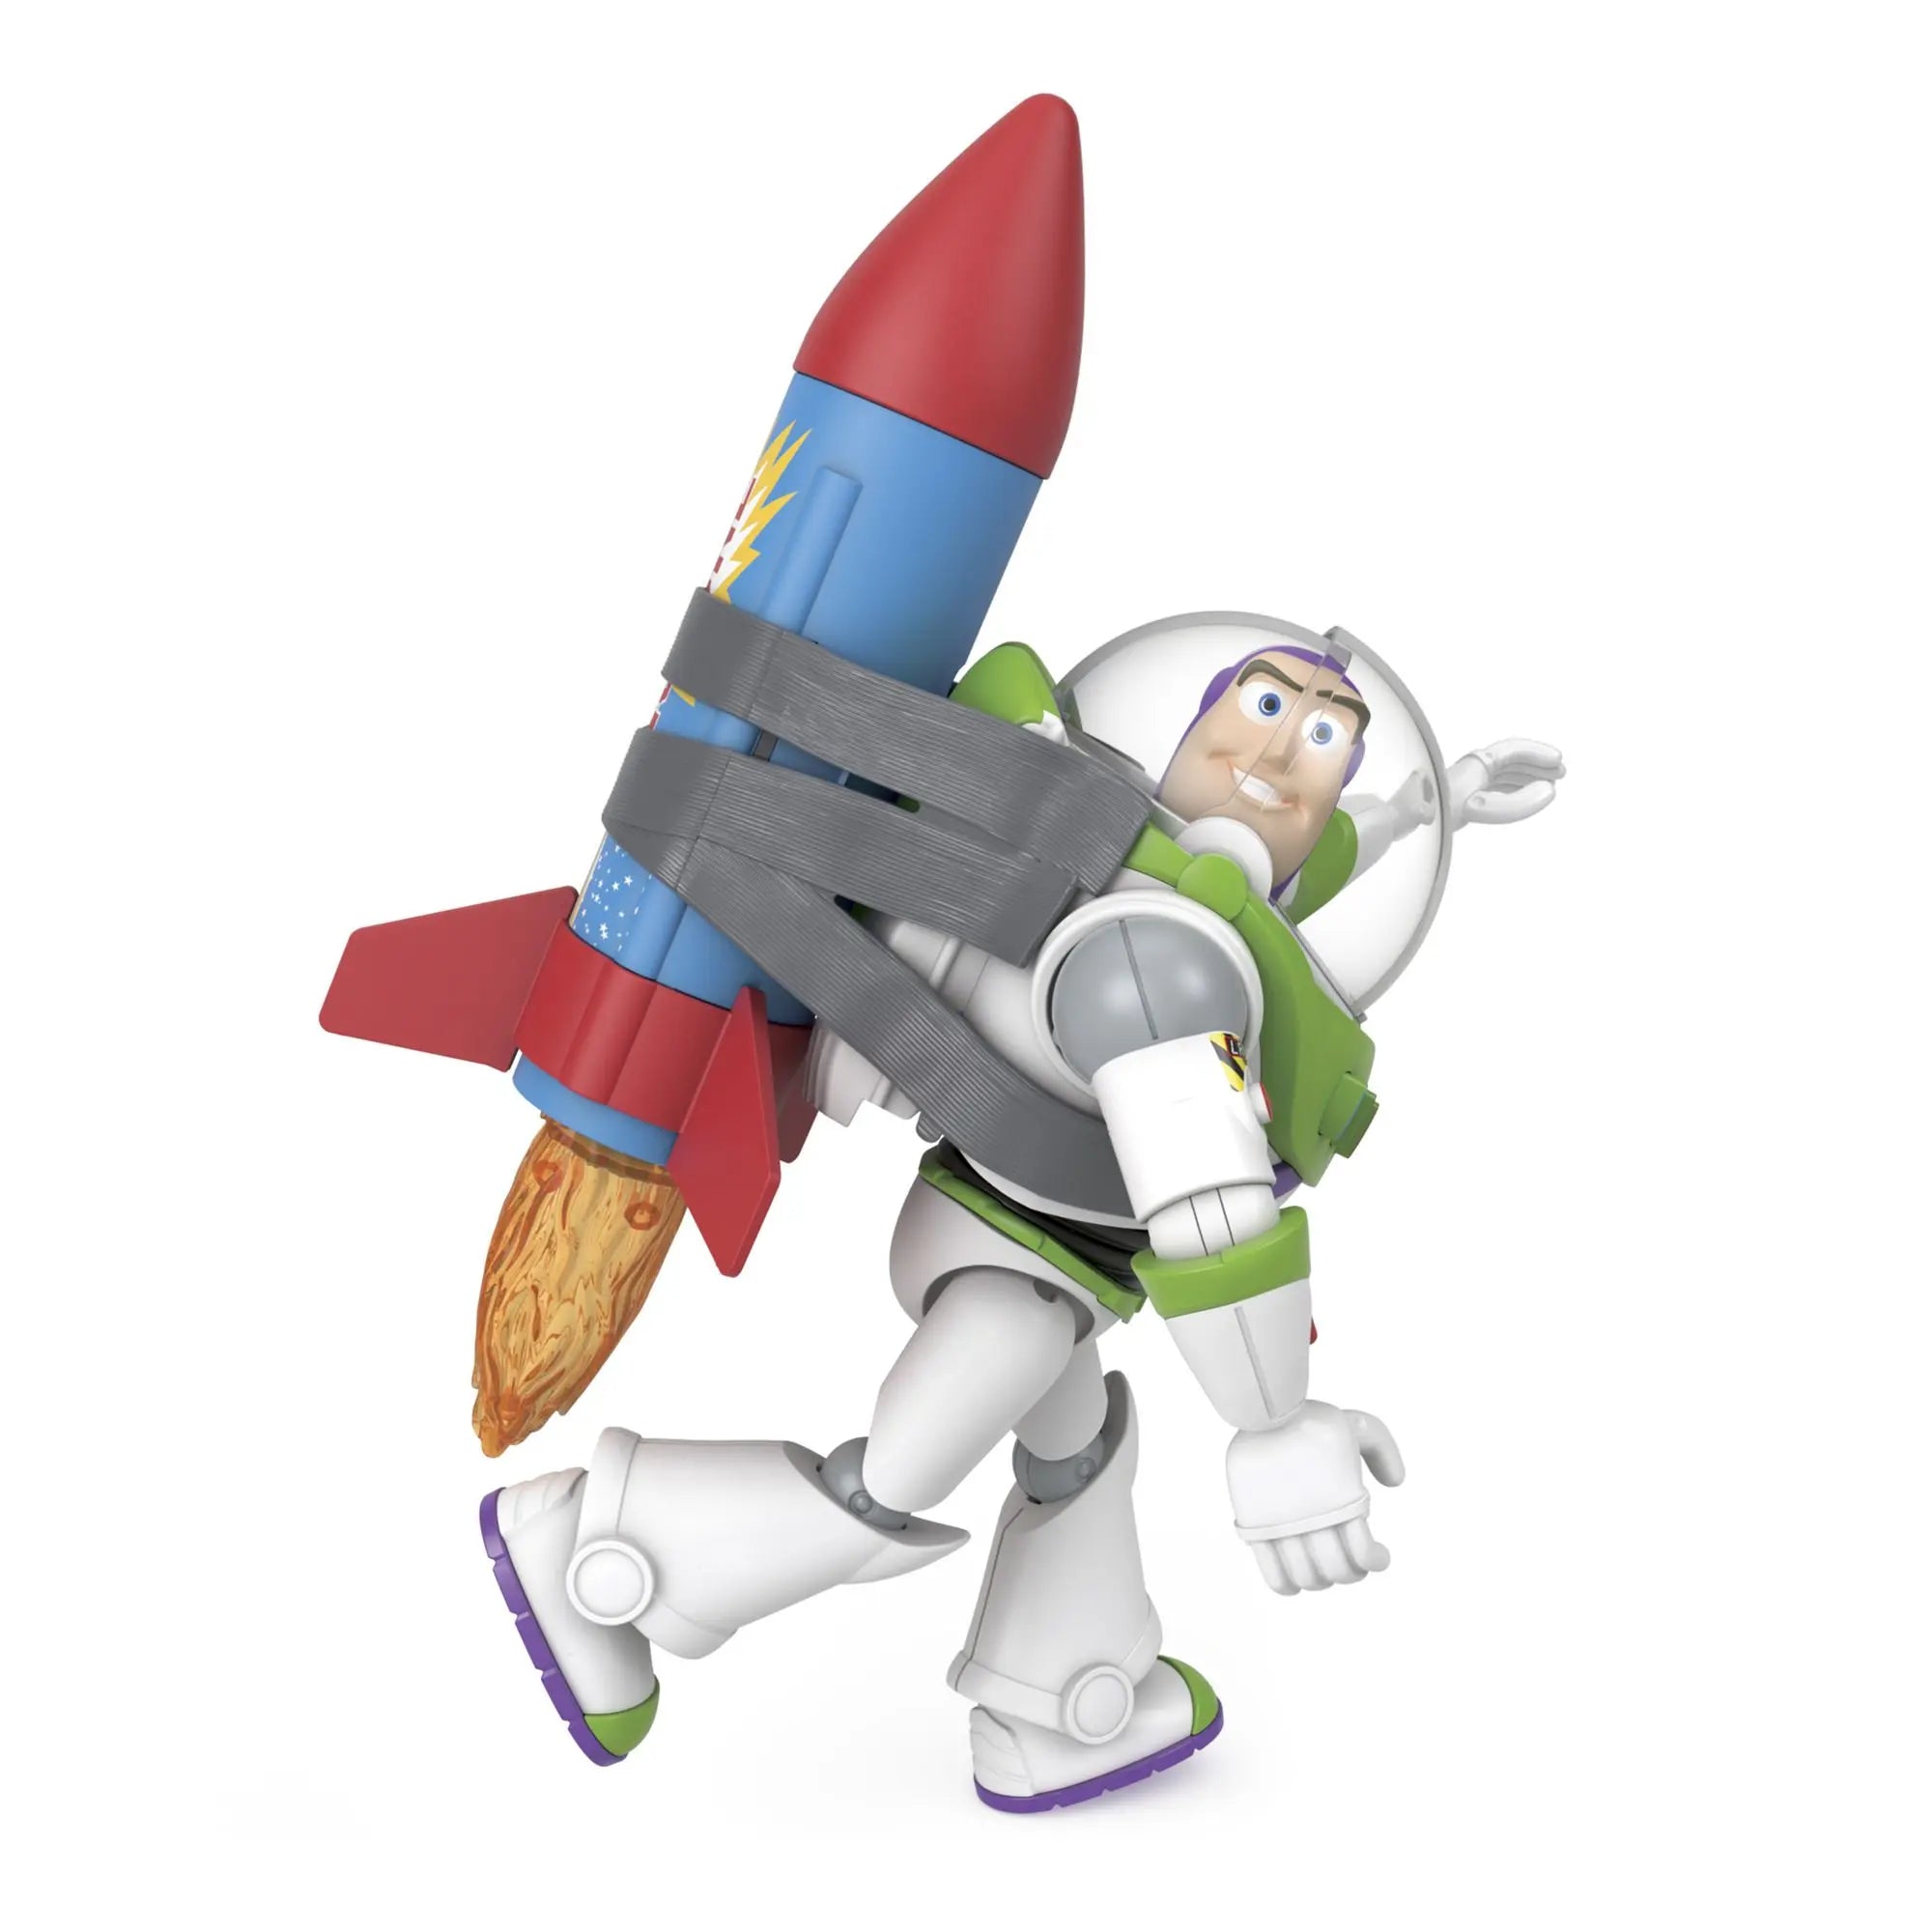 Disney Pixar Toy Story Rocket Rescue Buzz Lightyear Disney